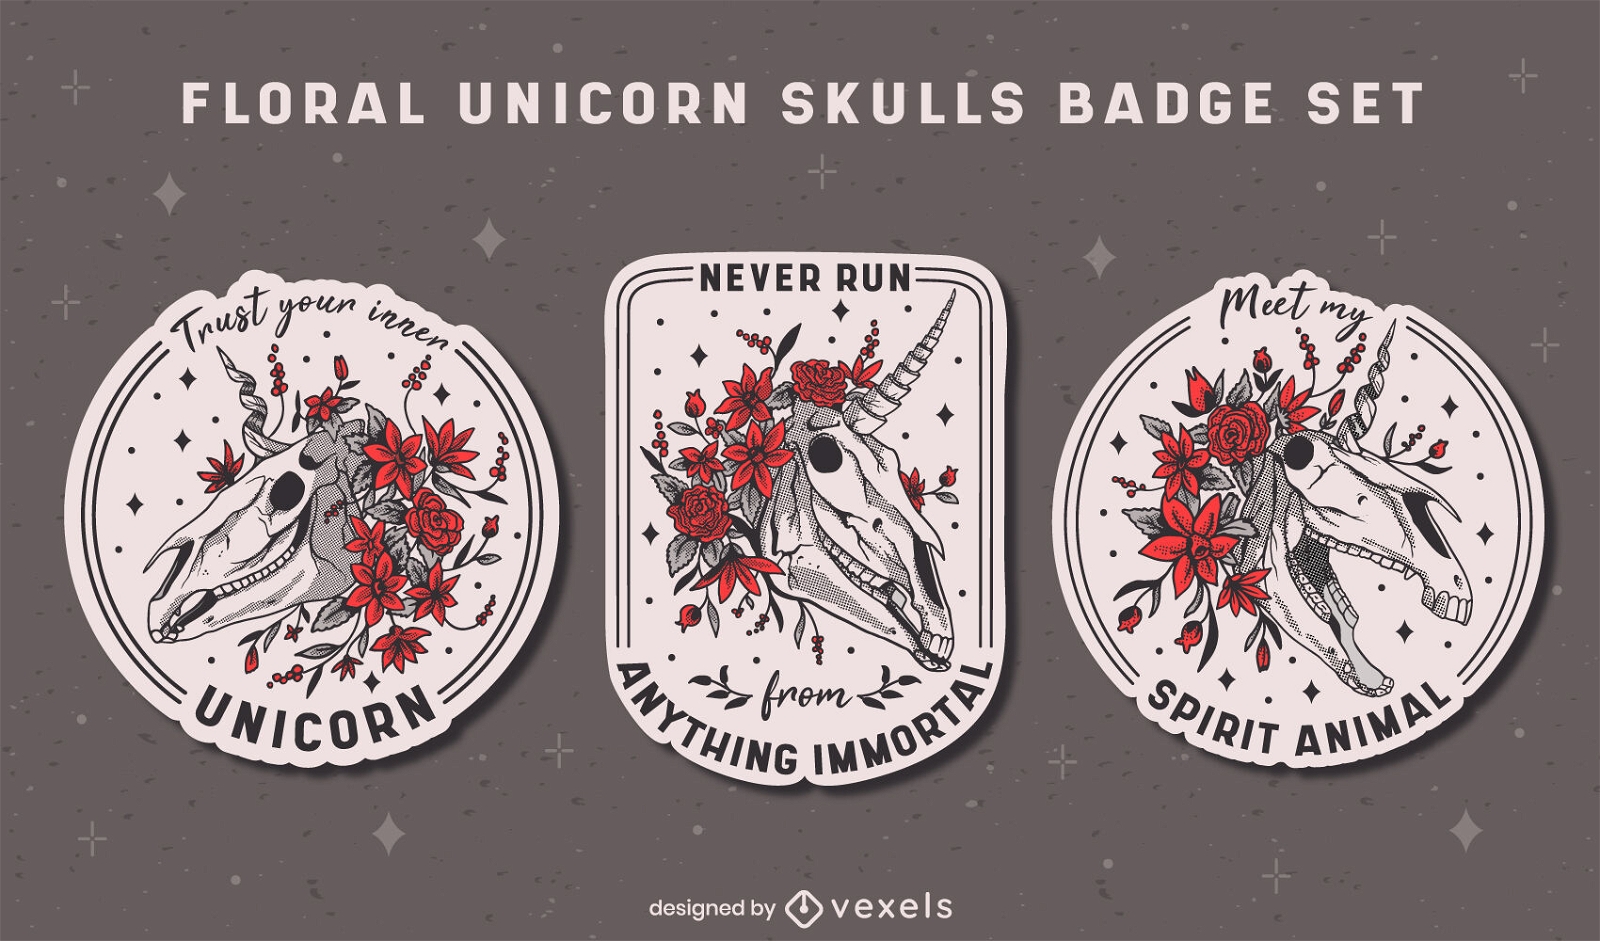 Floral unicorn creature skulls badges set